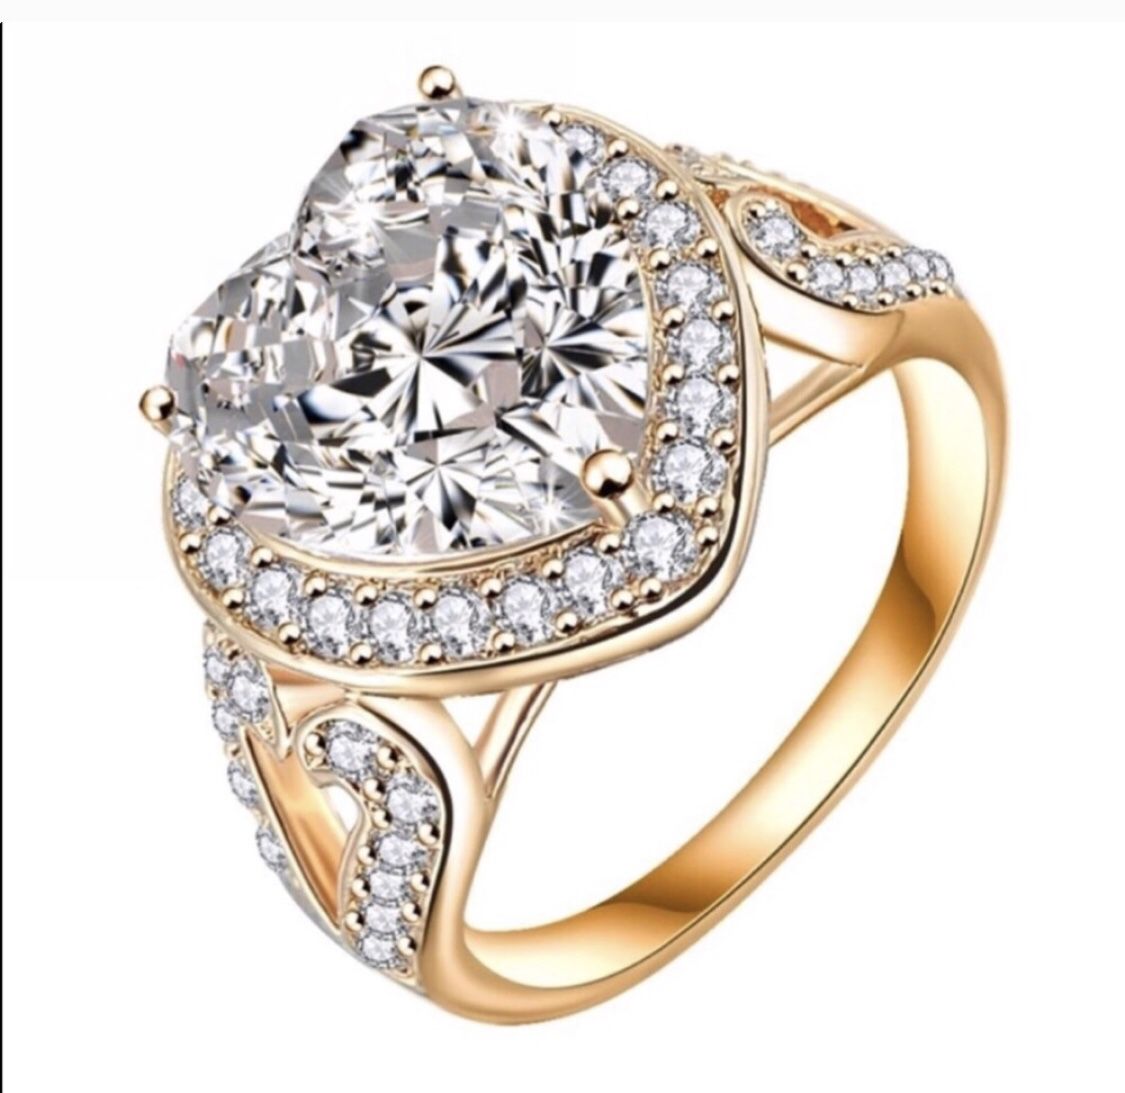 New 18 k gold engagement ring wedding ring set